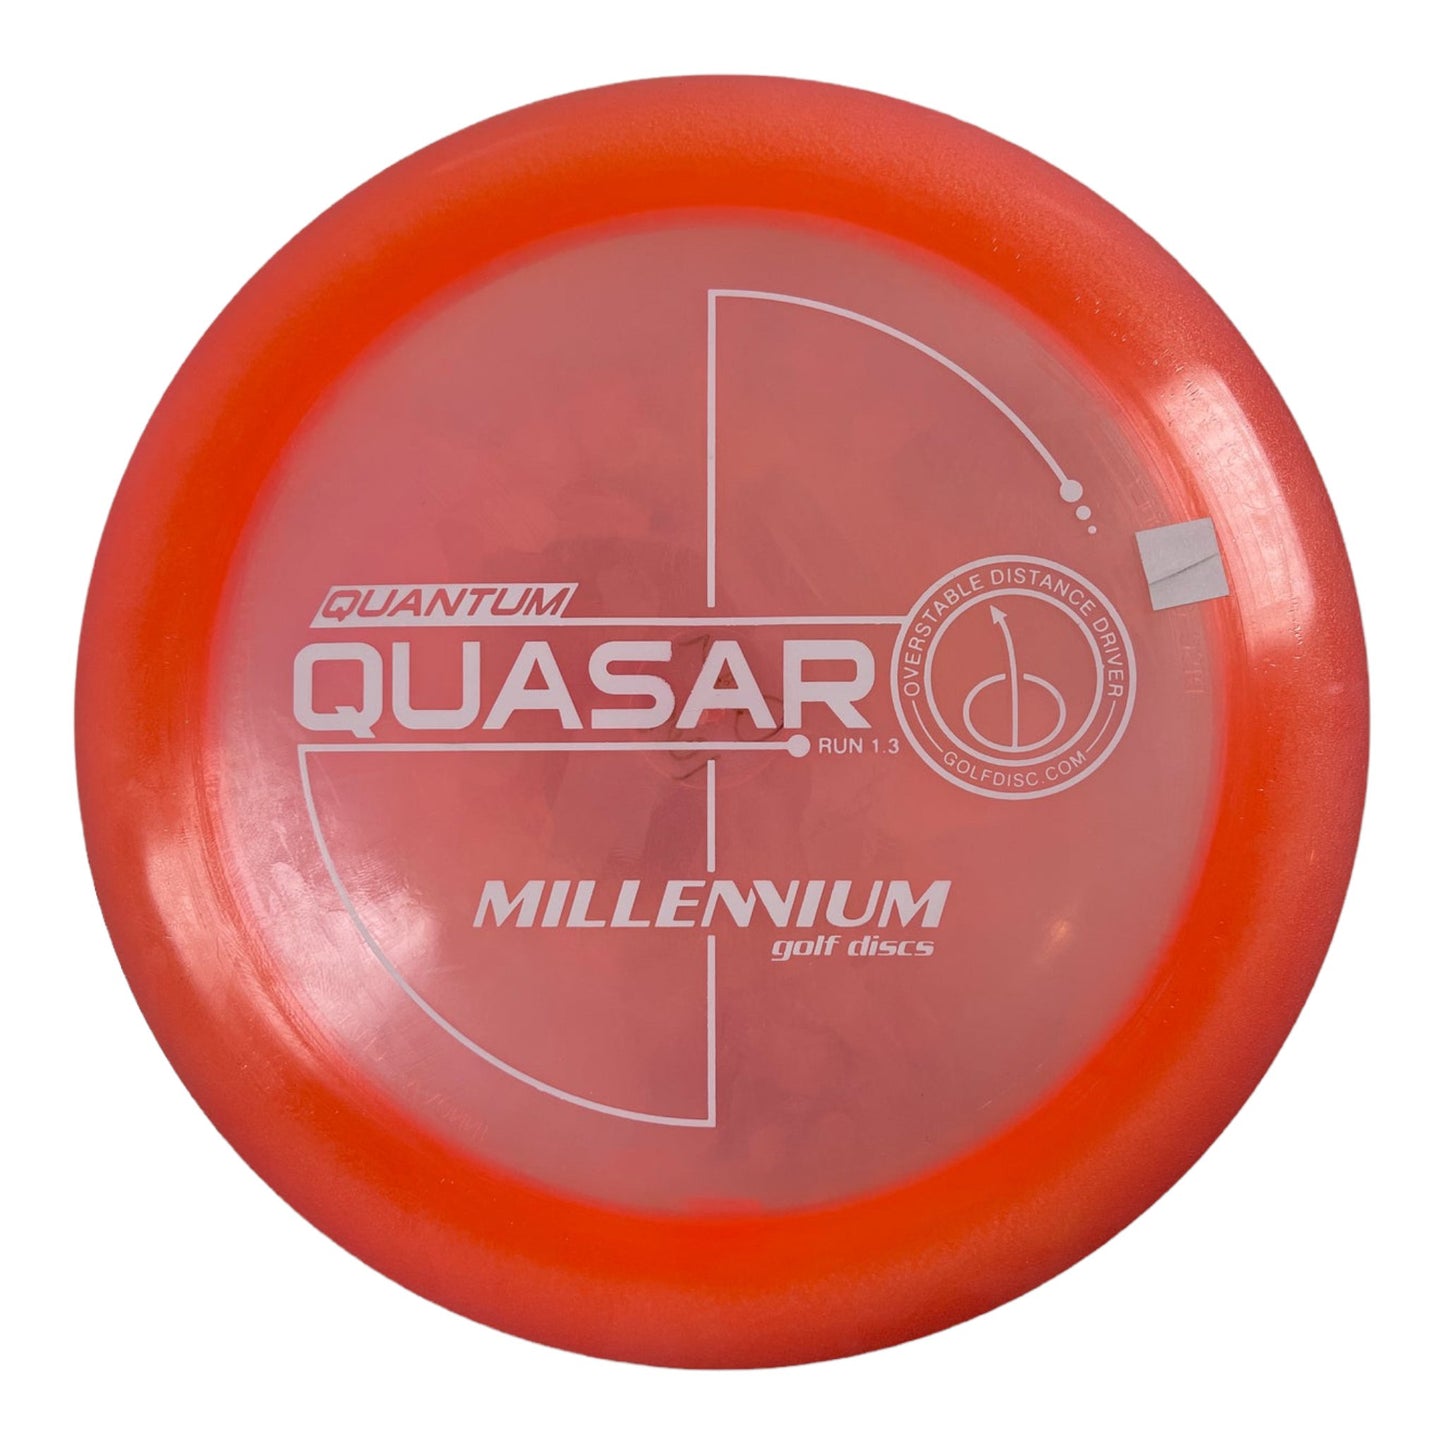 Millennium Golf Discs Quasar | Quantum | Peach/White 168g Disc Golf